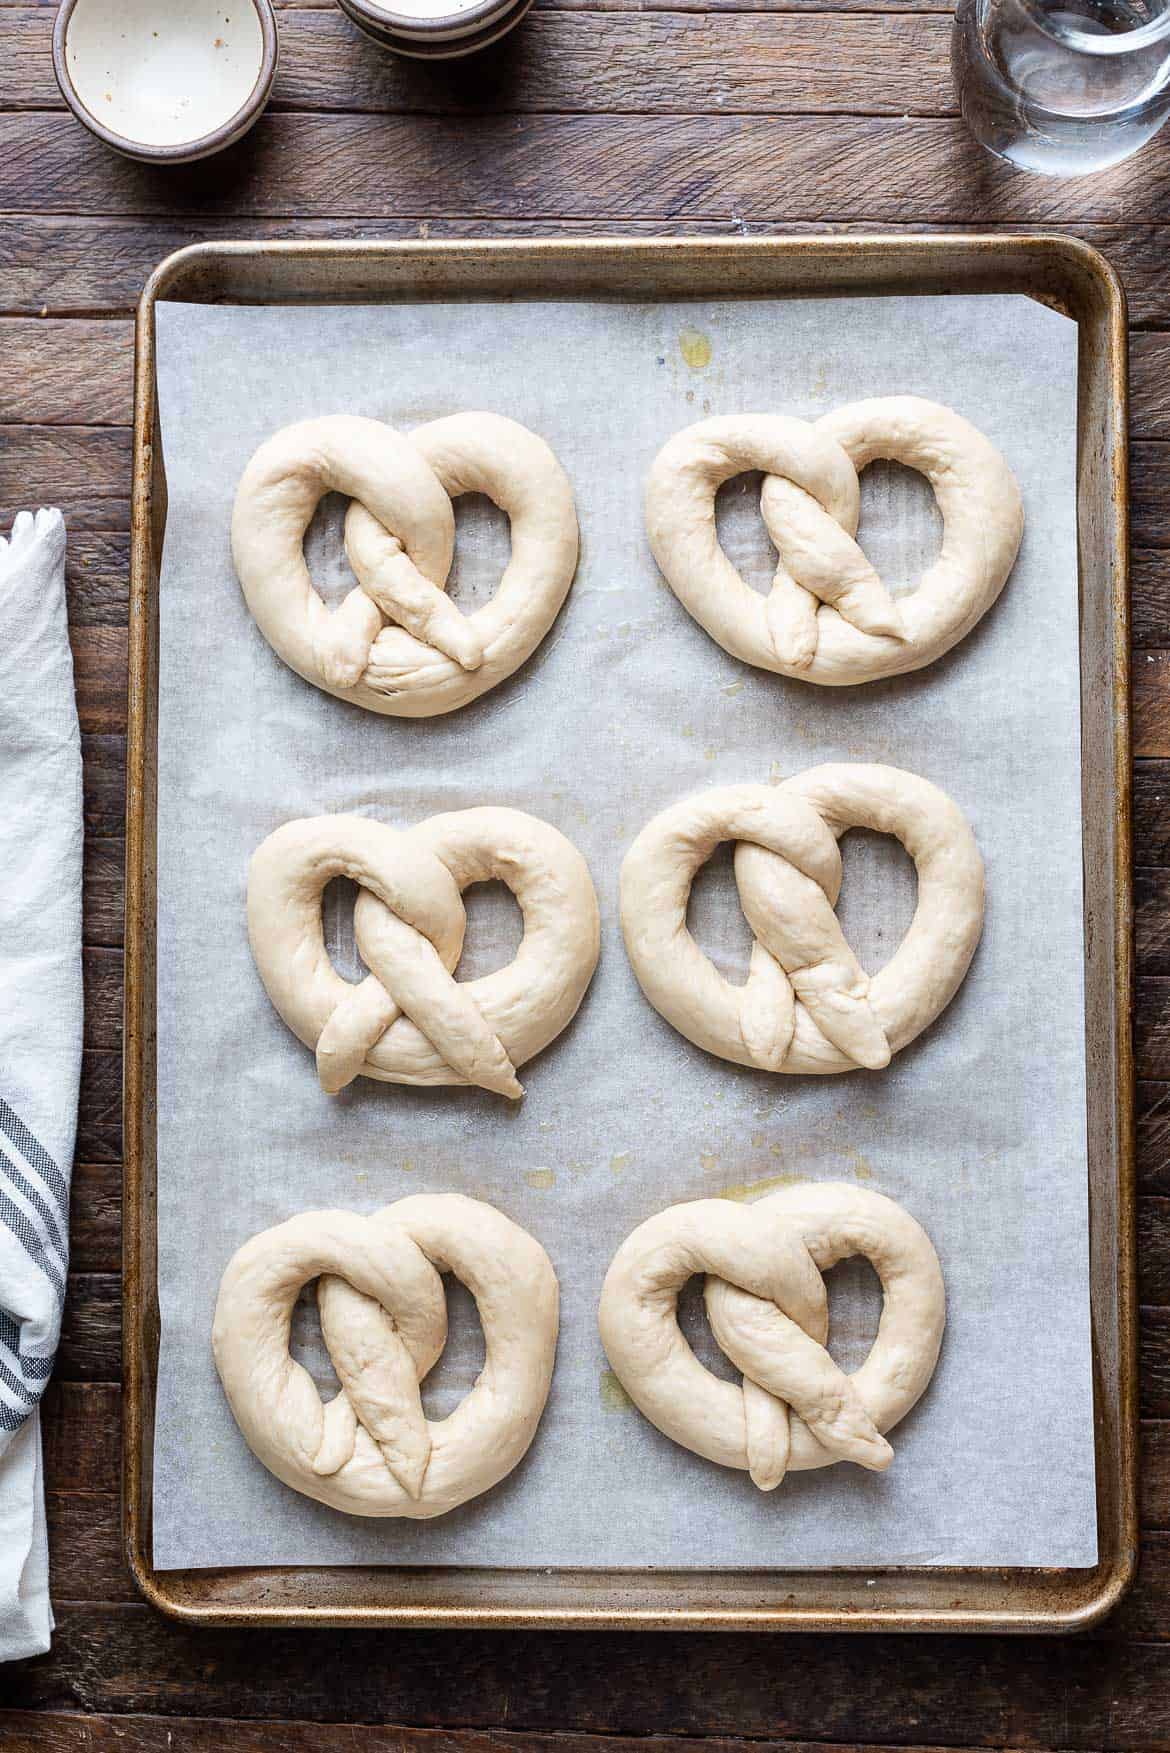 Shaped Bavarian pretzels on a bakng sheet.